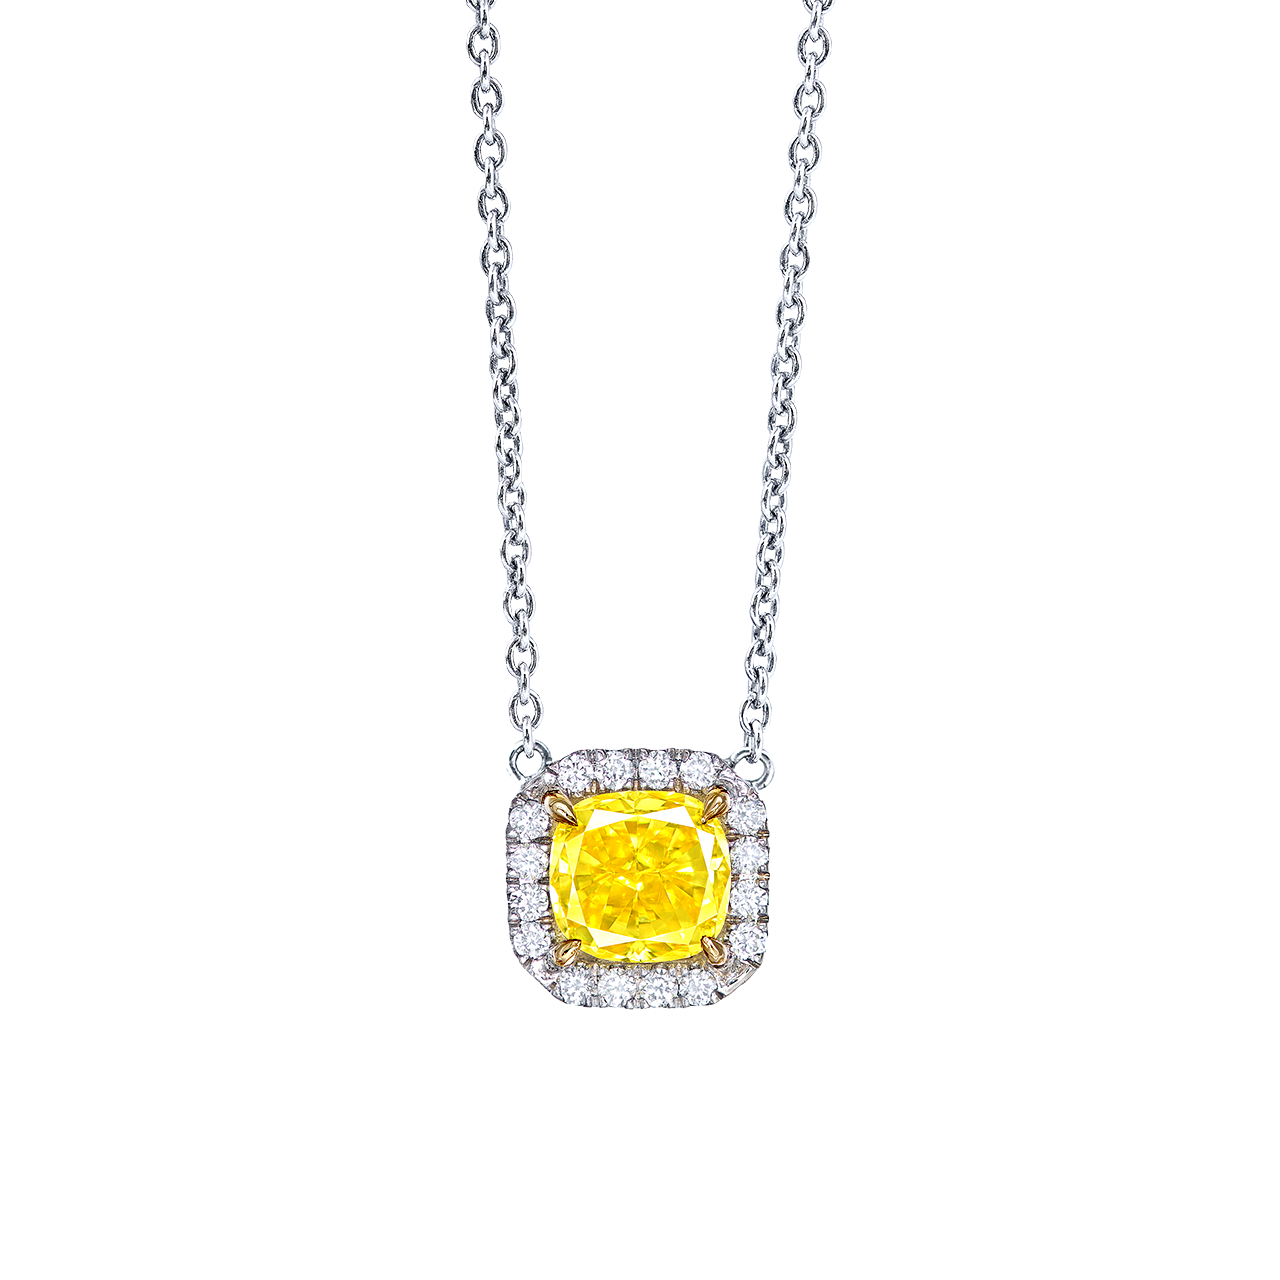 GIA 0.94克拉 艷彩黃鑽墜鍊
Fancy Vivid Yellow Colored 
Diamond Necklace